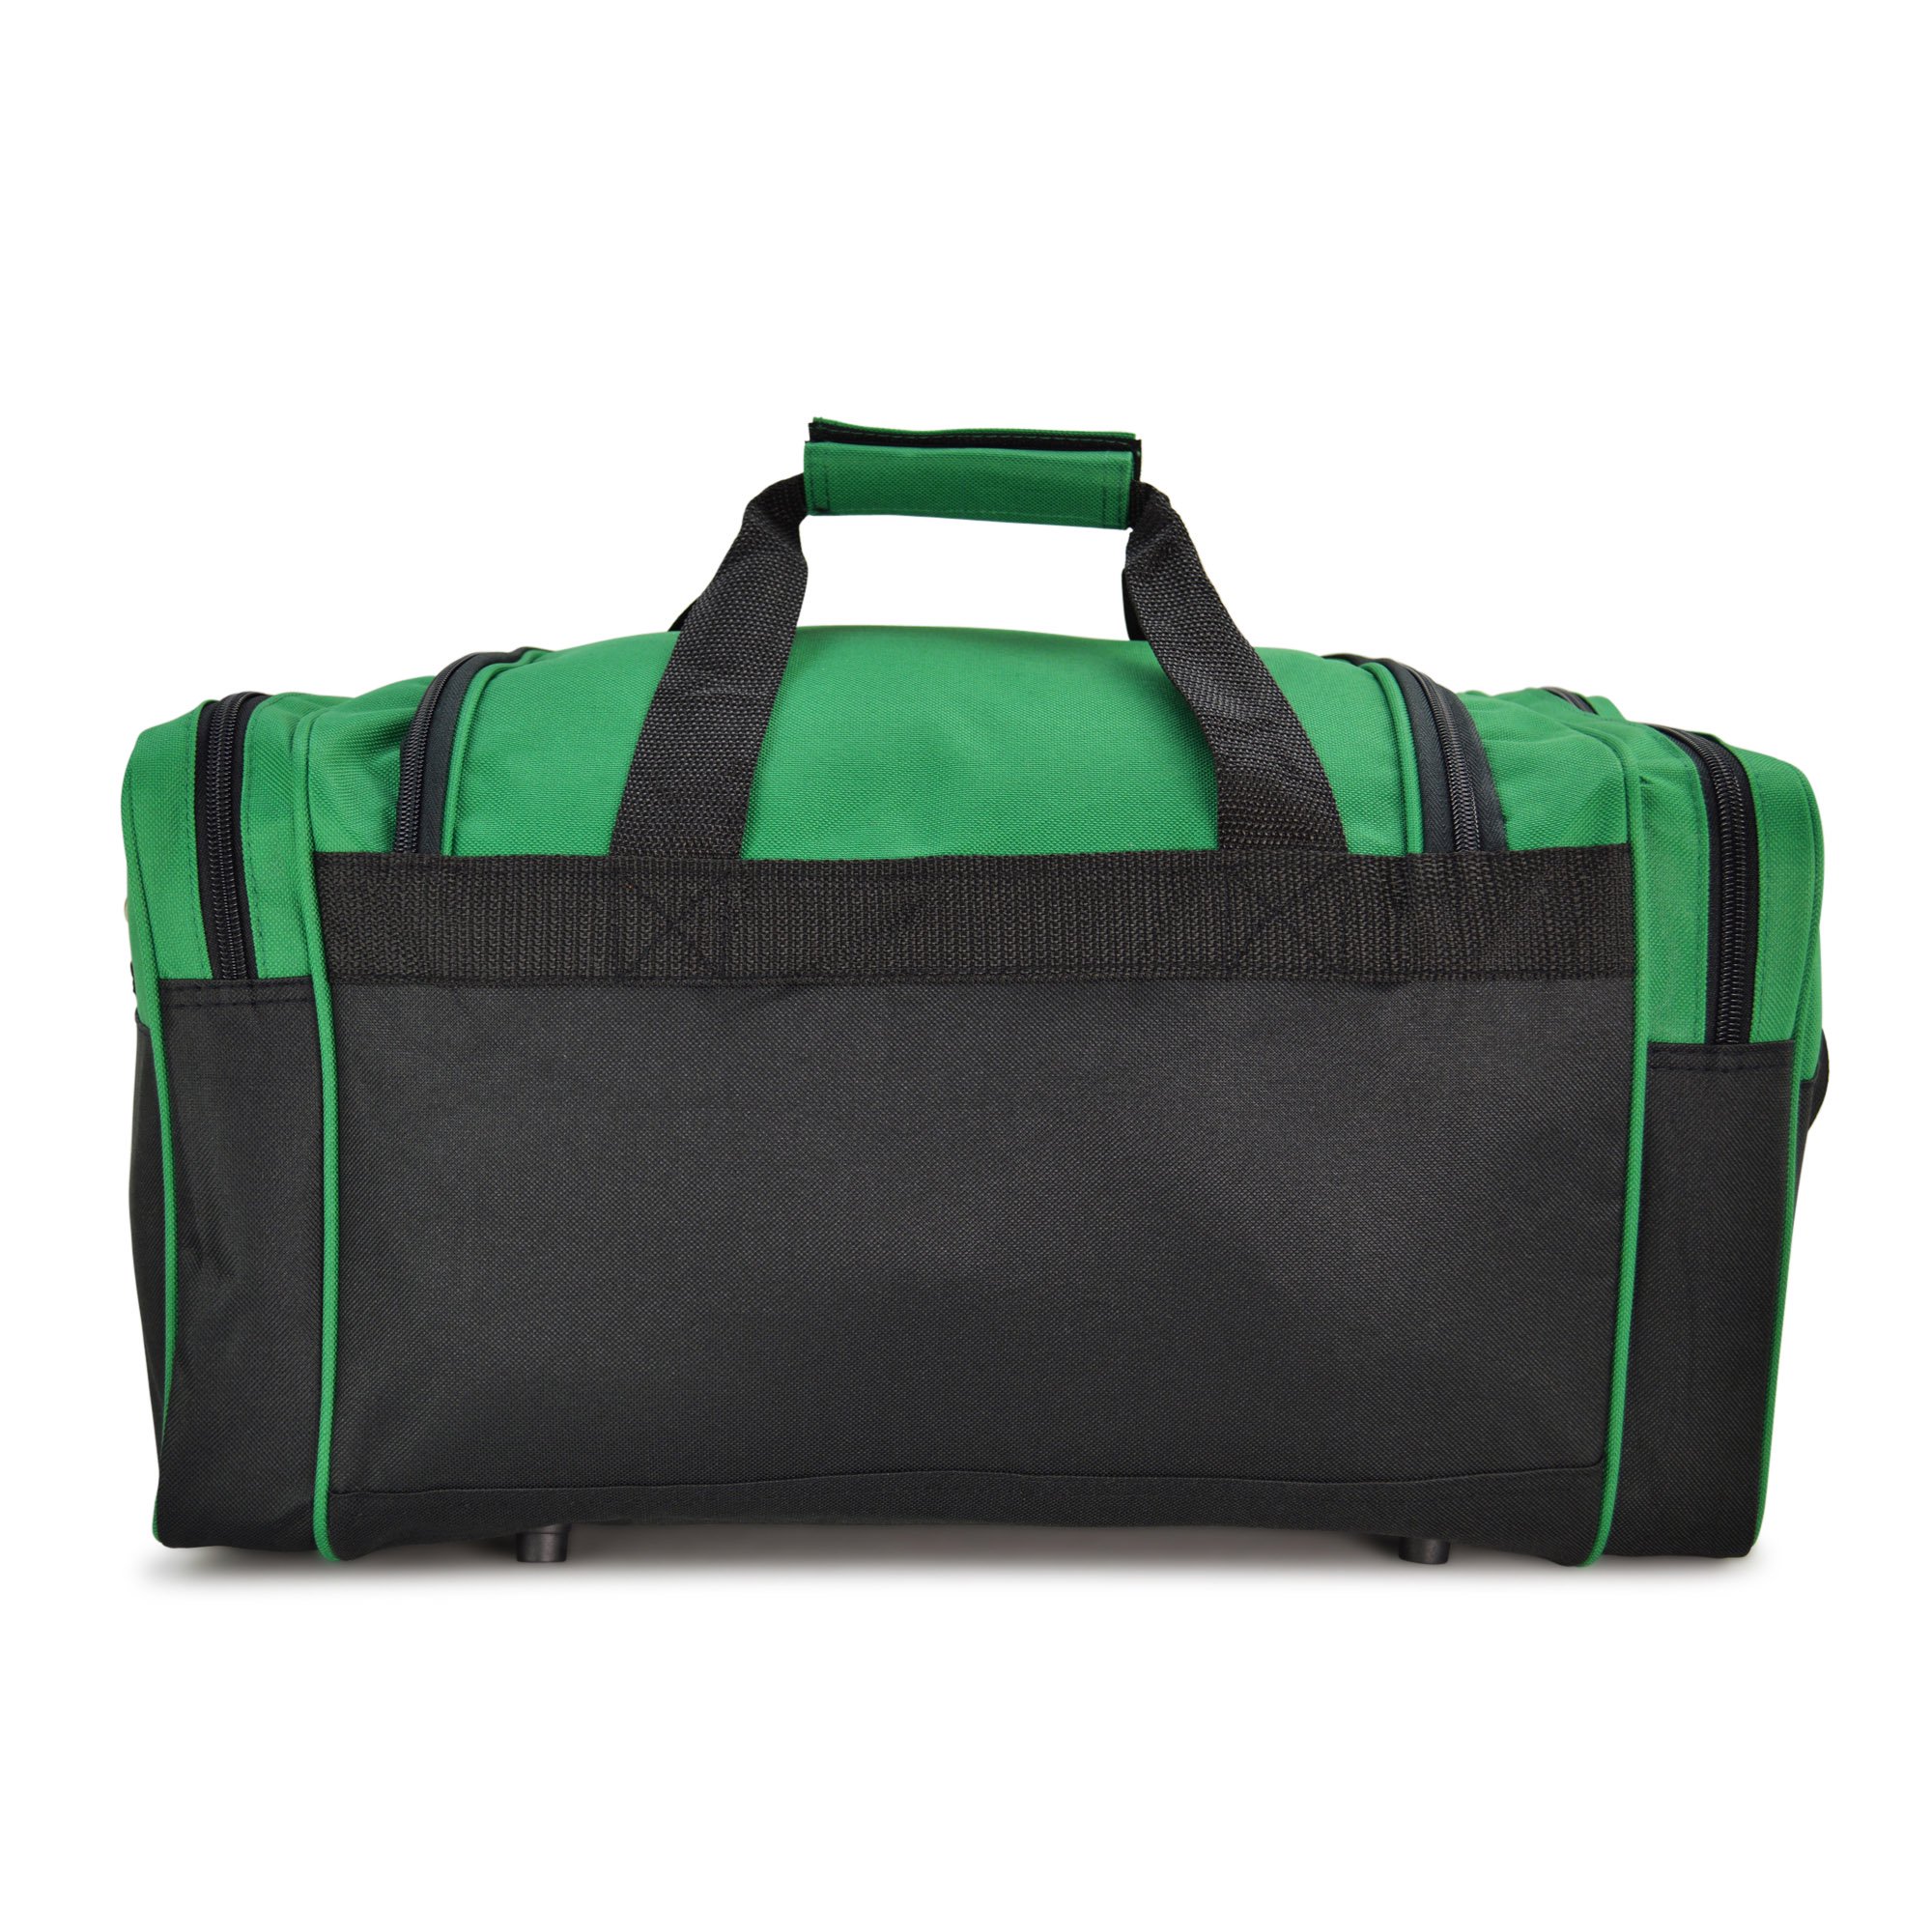 Wholesale Custom logo Green Sports Duffle Bag Sack Kit Gym Bag Trendy Top Travel Bag Available in Colors